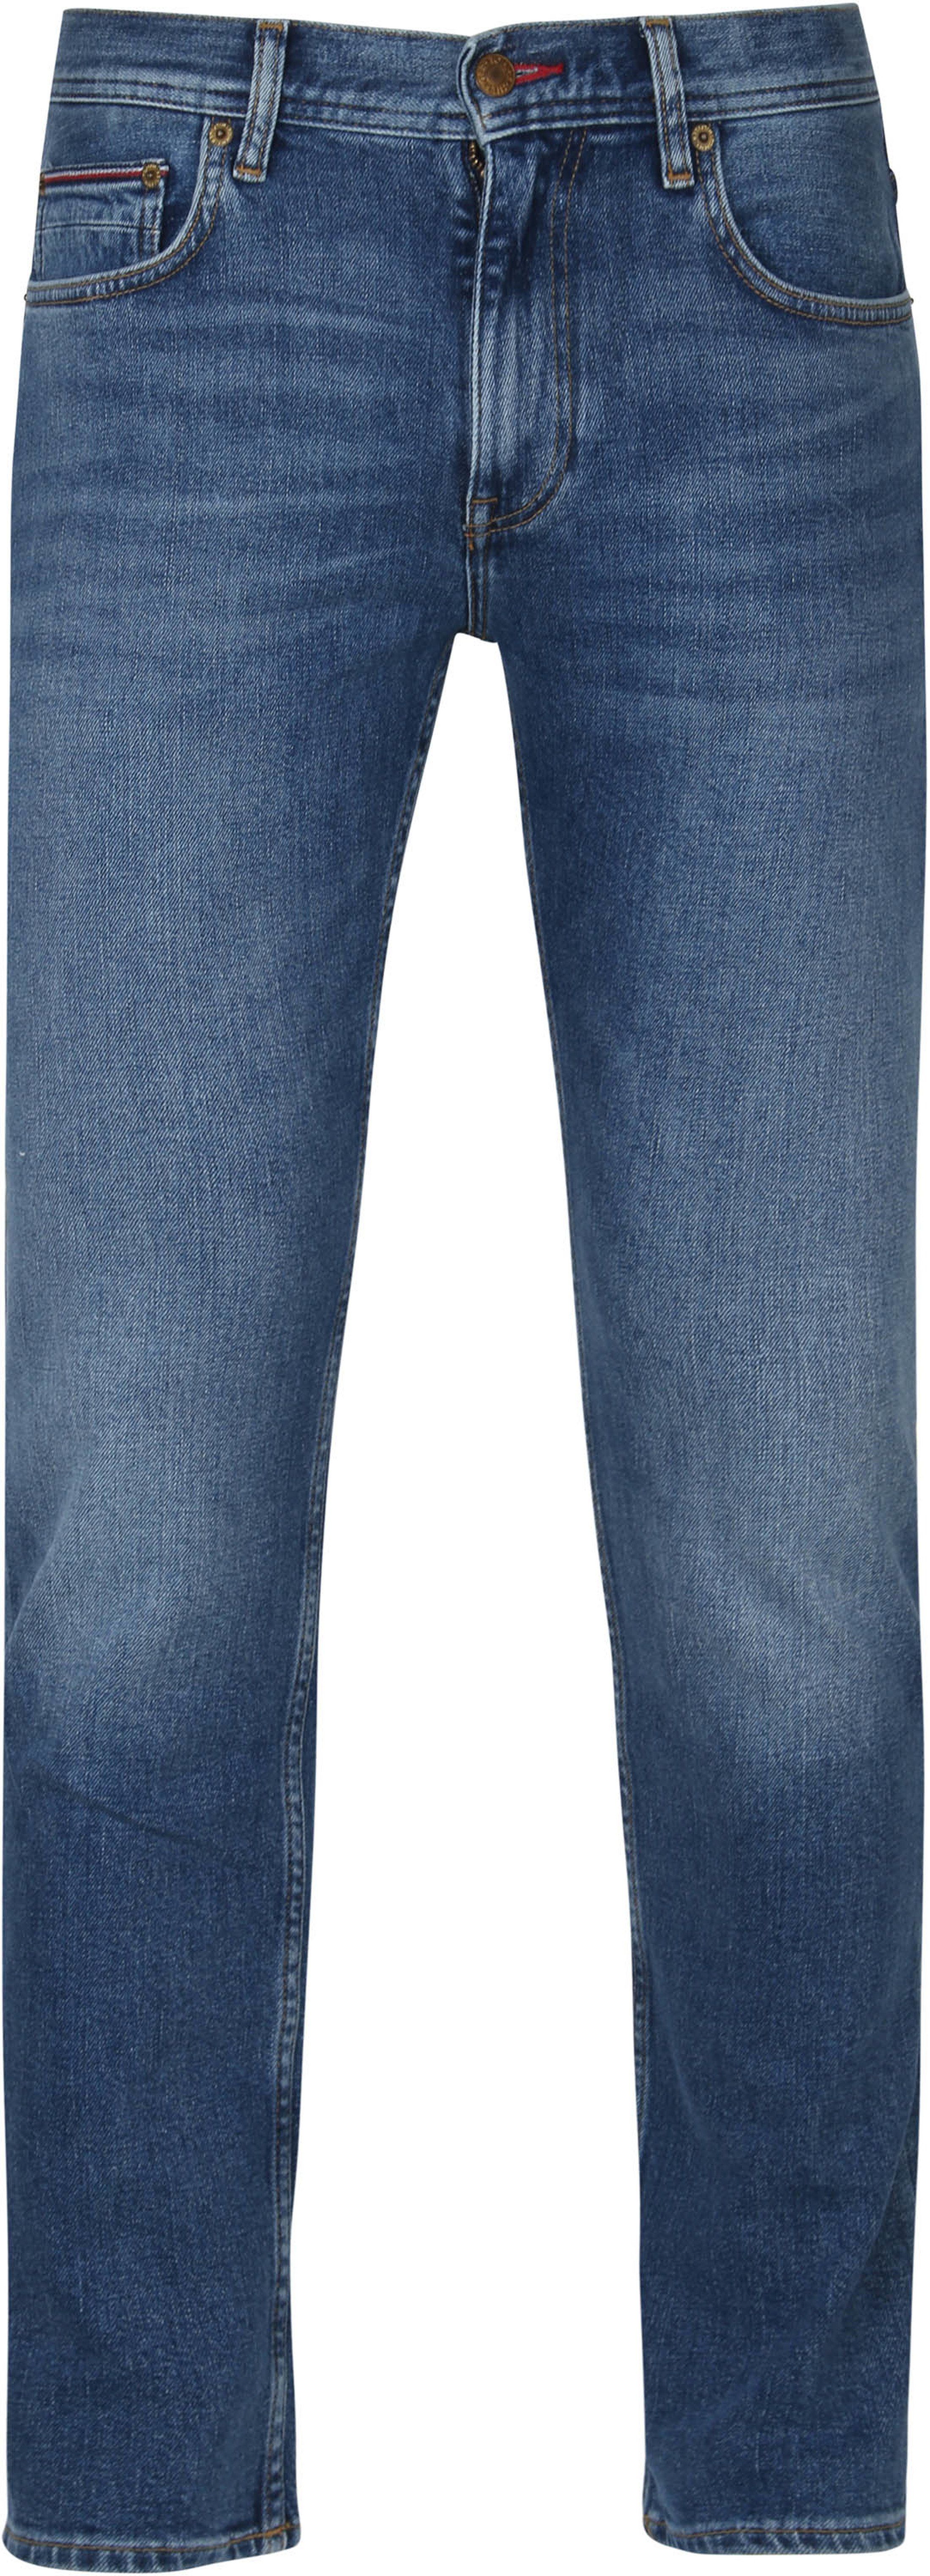 Tommy Hilfiger Core Denton Jeans Boston Indigo Blue size W 38